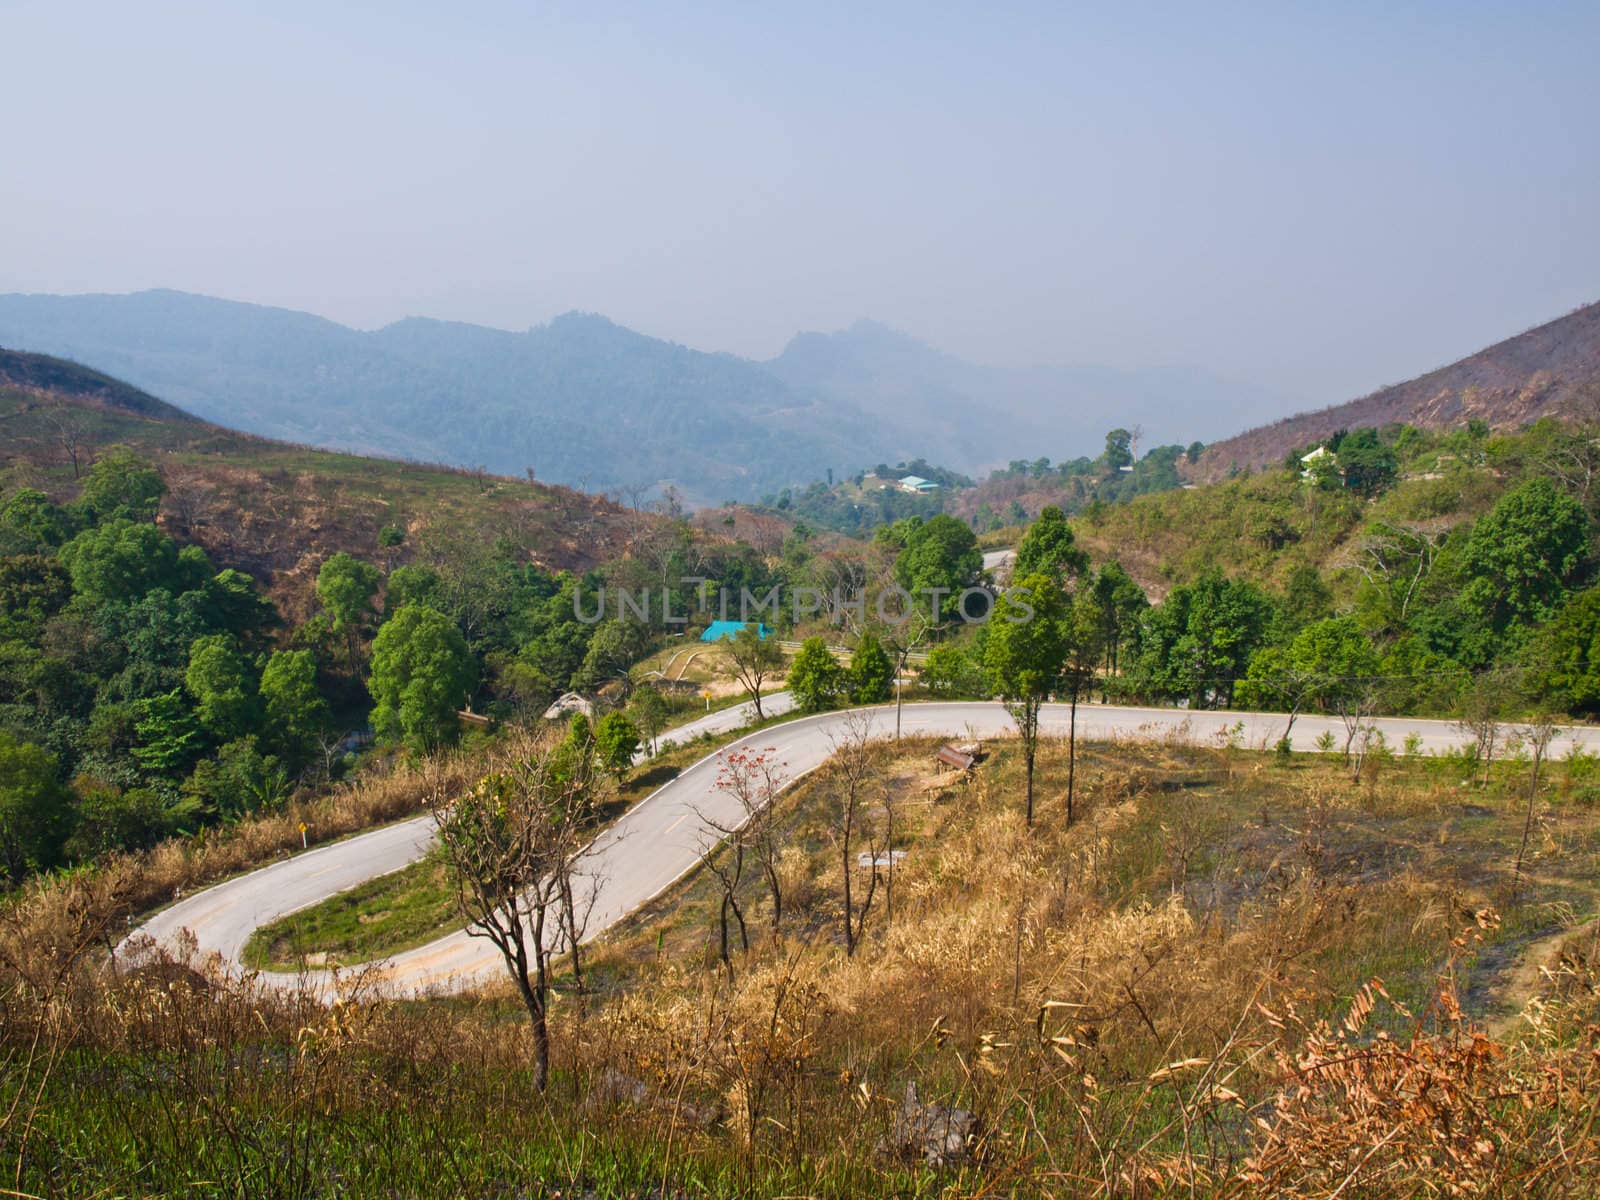 Road view from Phatang hill, Chiang rai, Thailand by gururugu